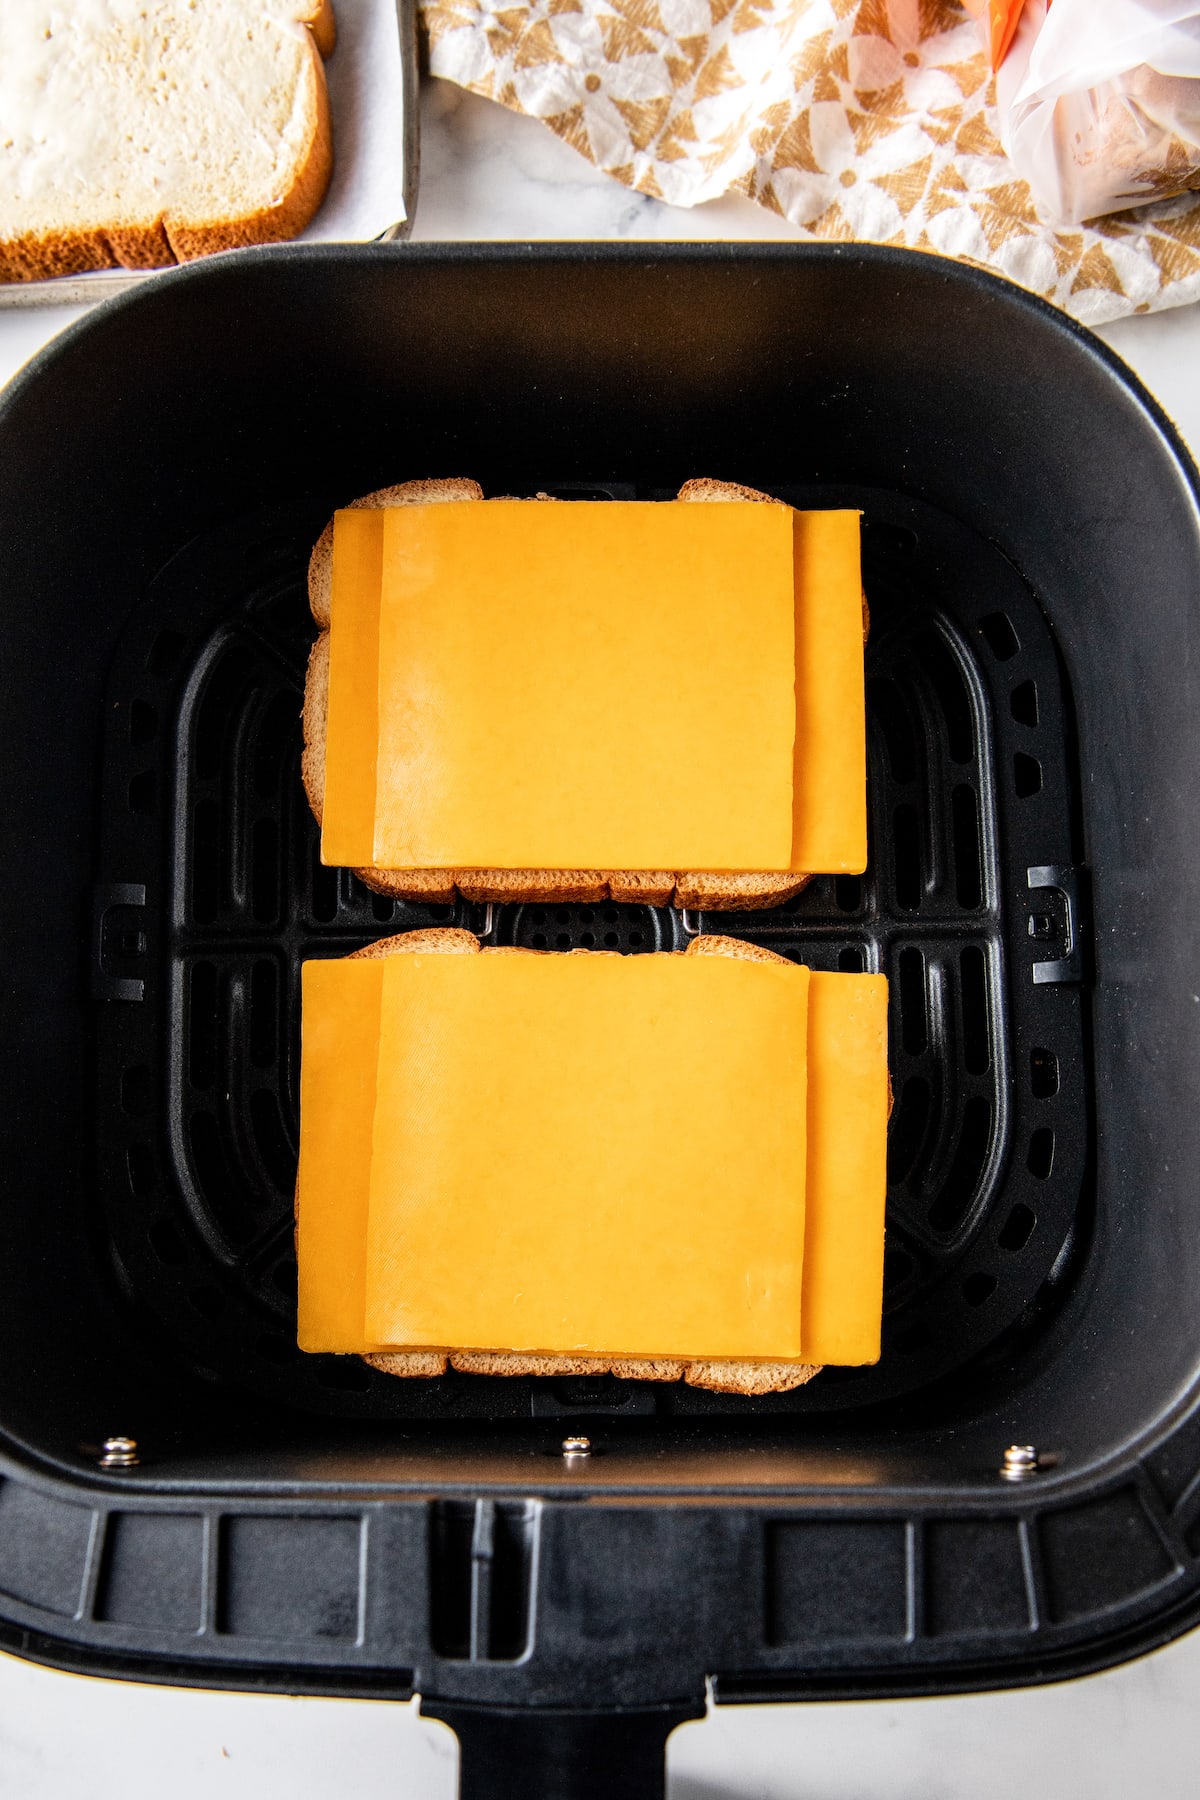 sliced cheese on sandwich bread in an air fryer